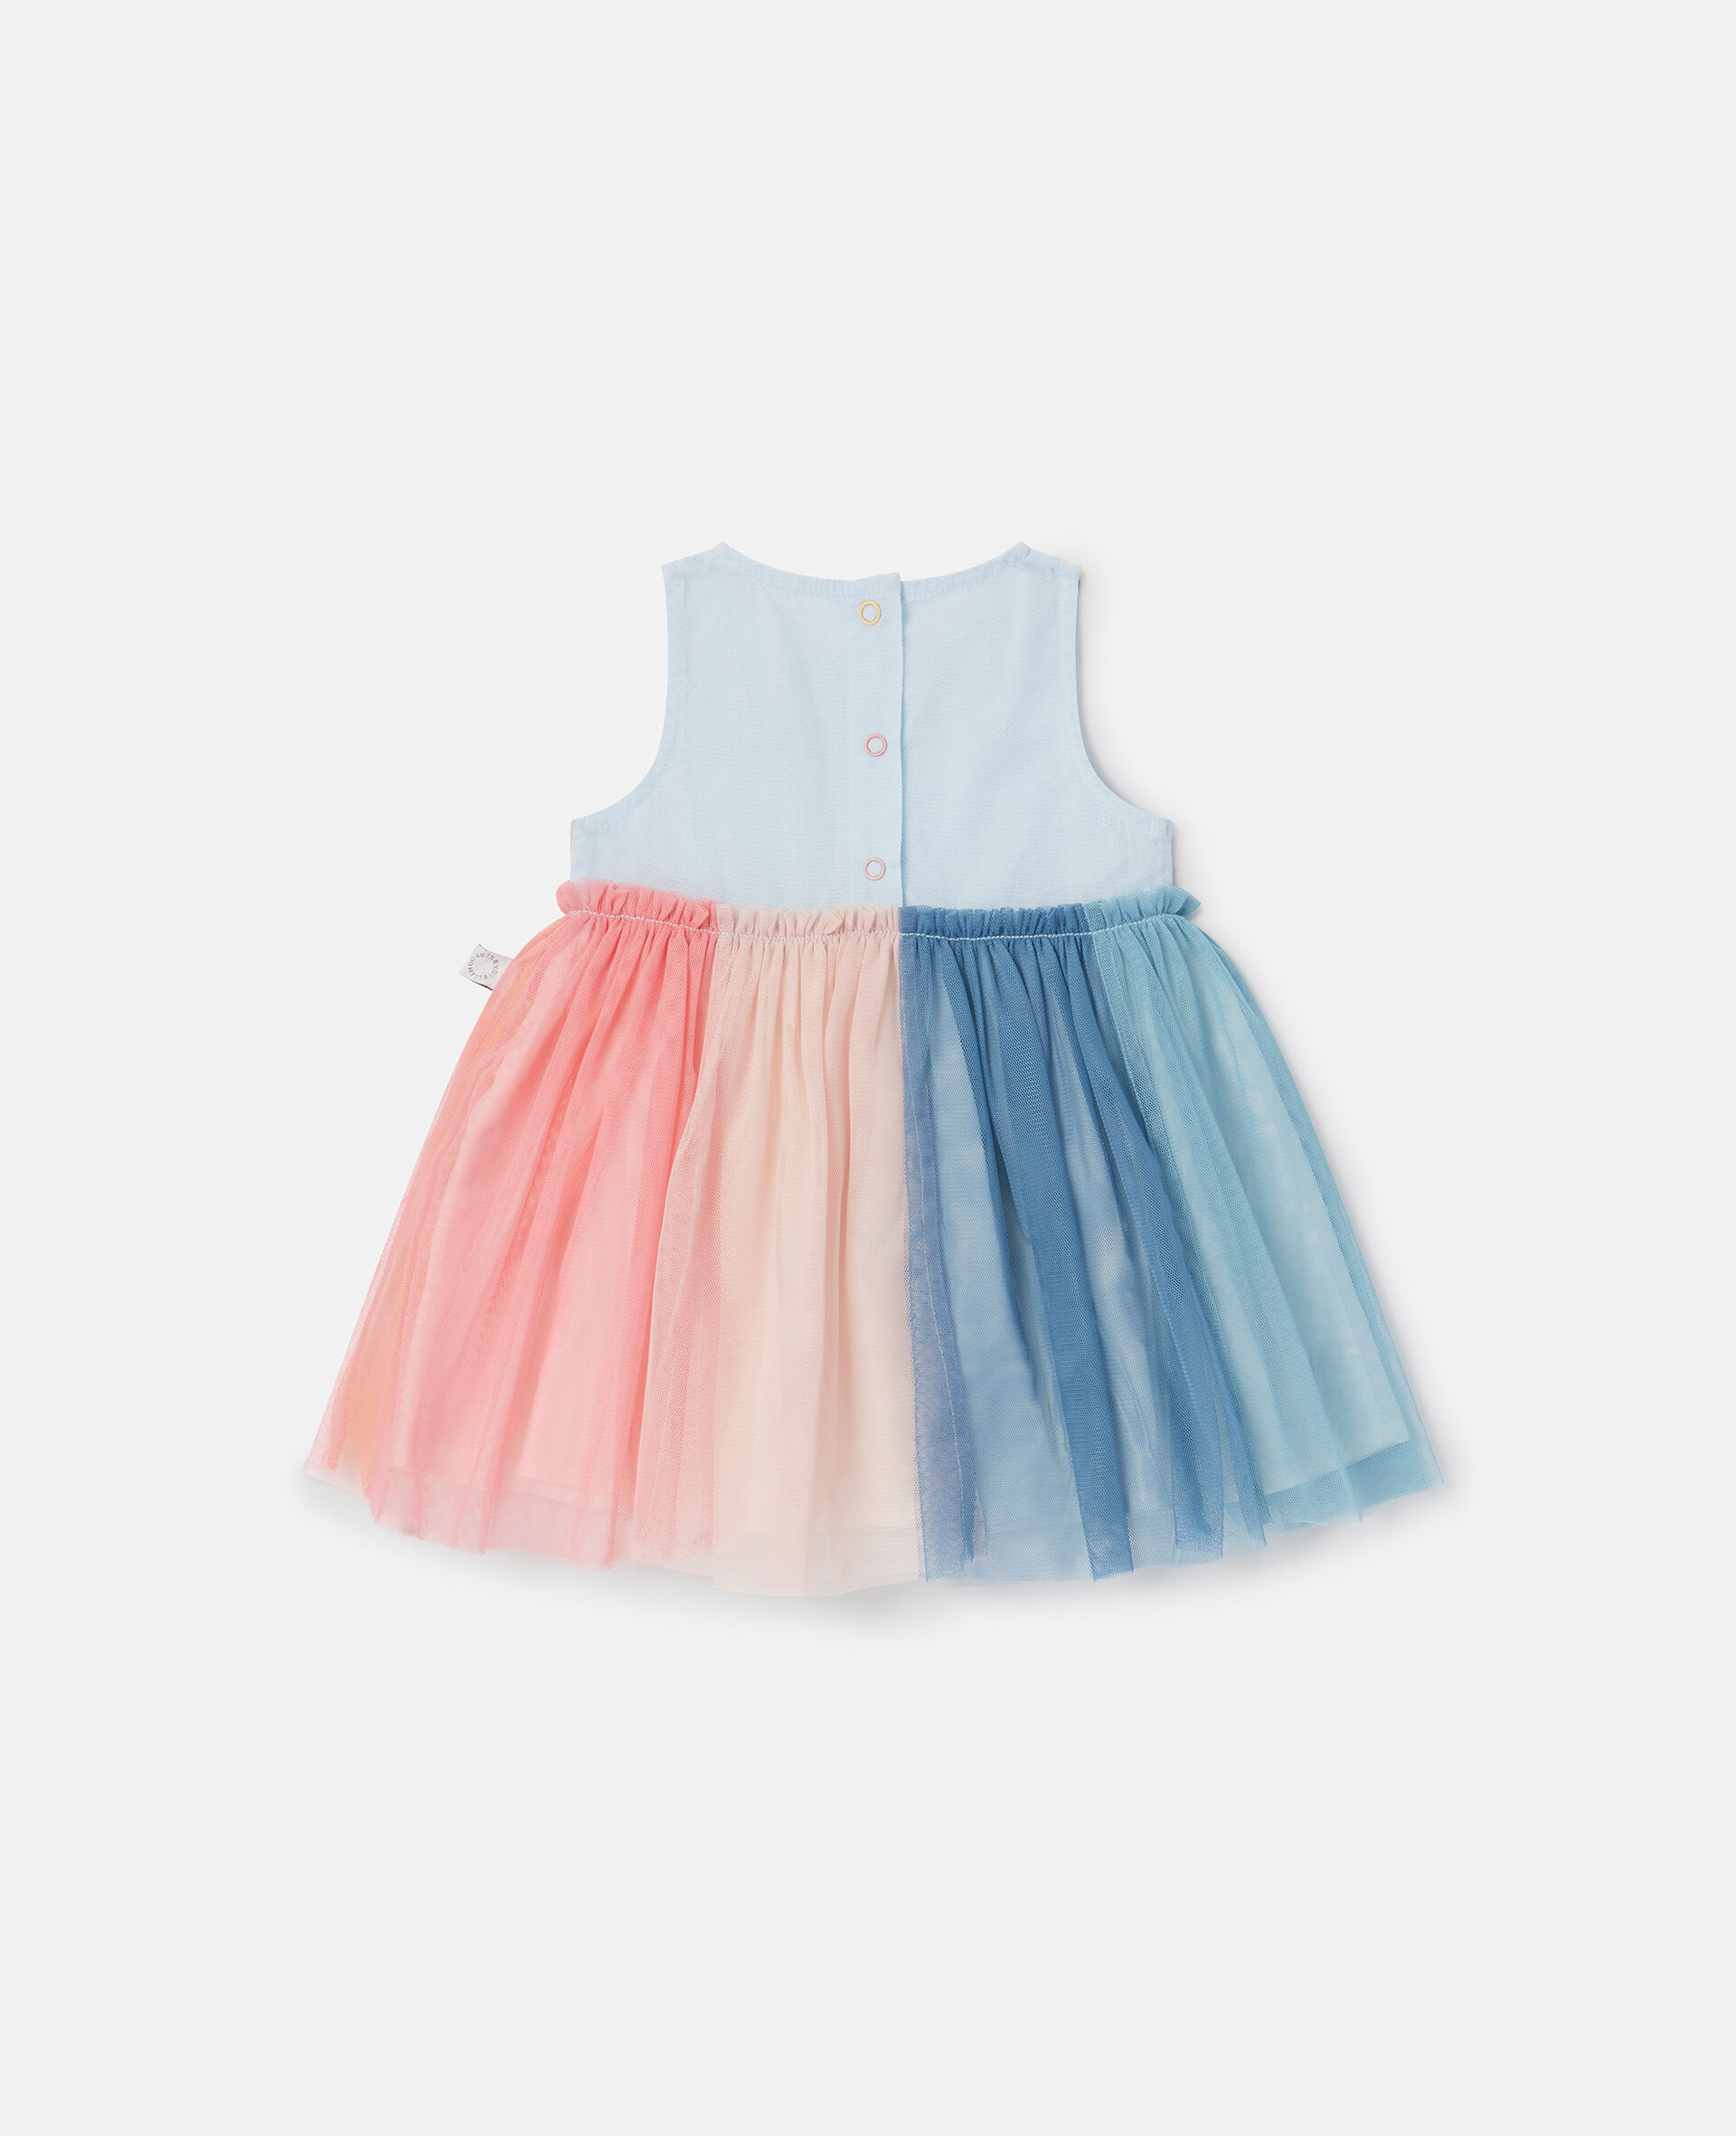 Rainbow Tulle Dress-Multicolour-large image number 2